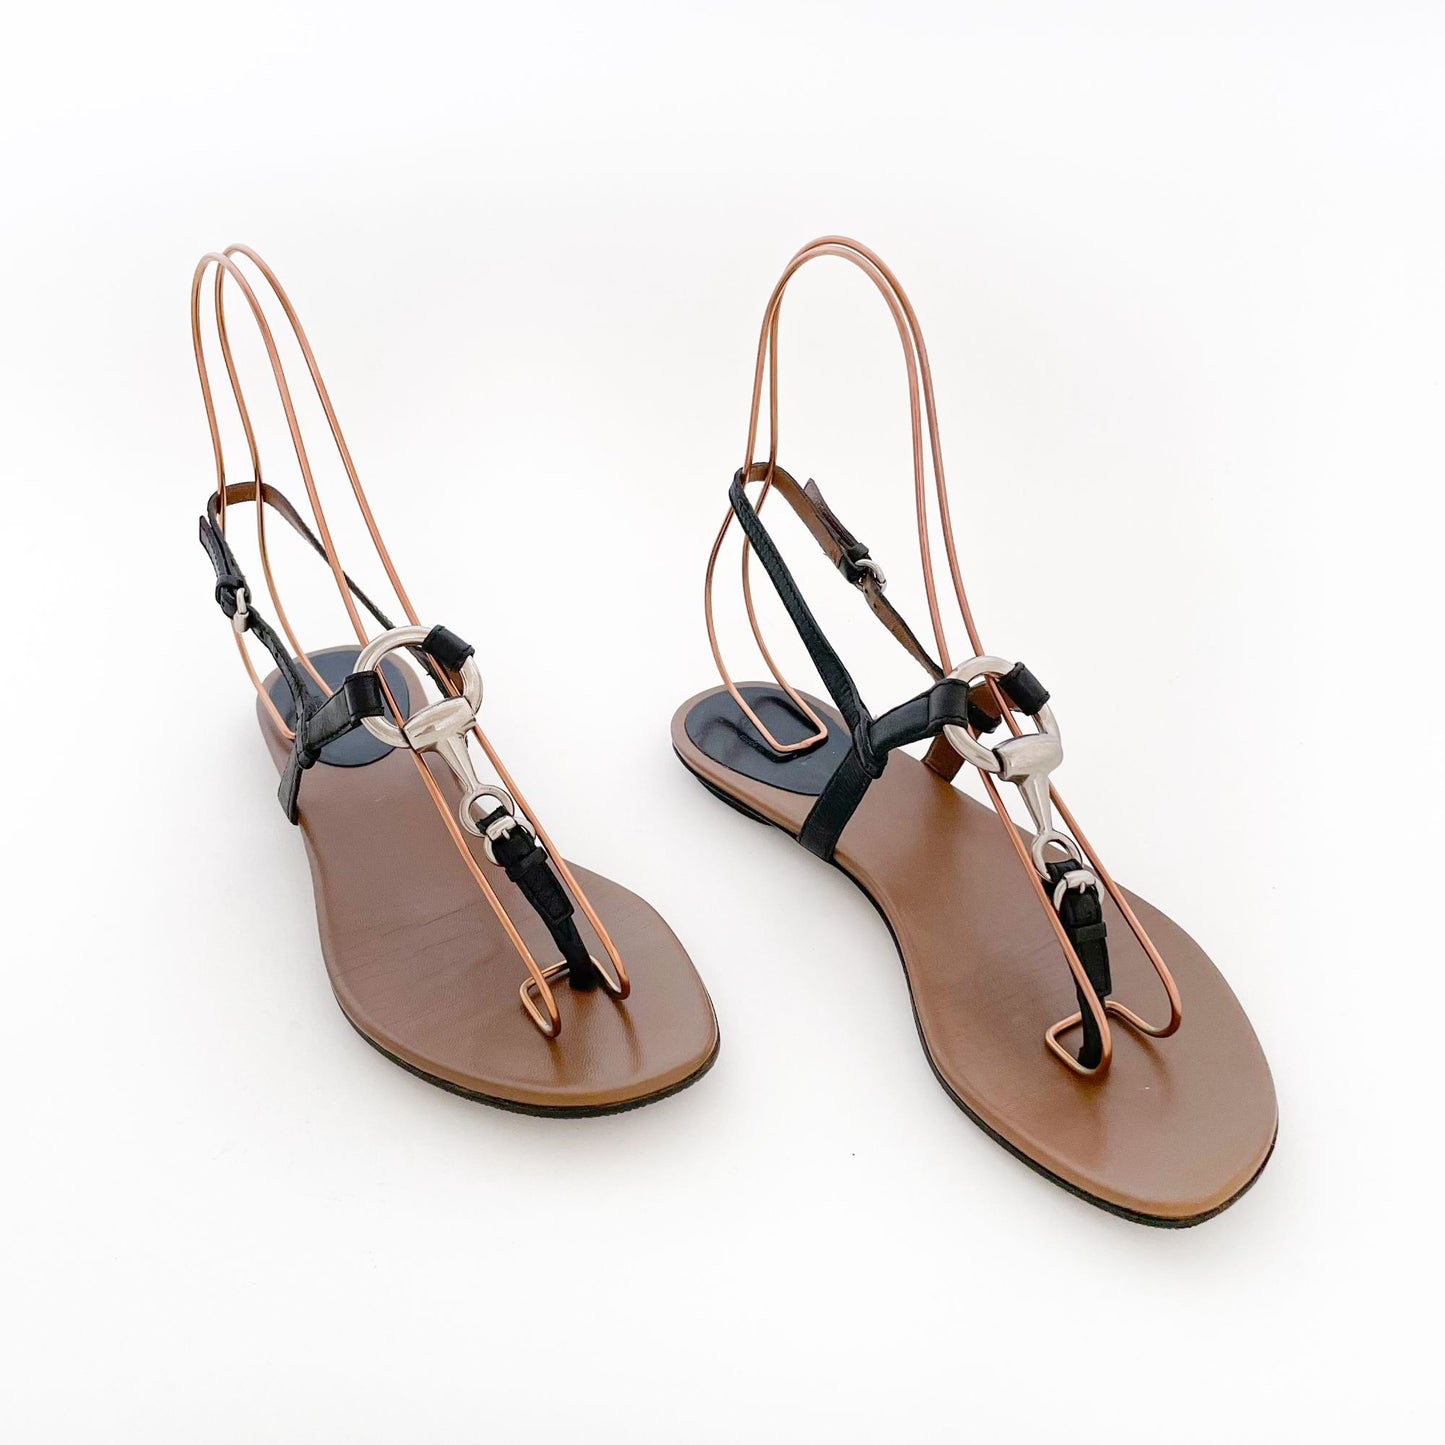 Gucci Horsebit T-Strap Sandals in Black/Brown Size 36